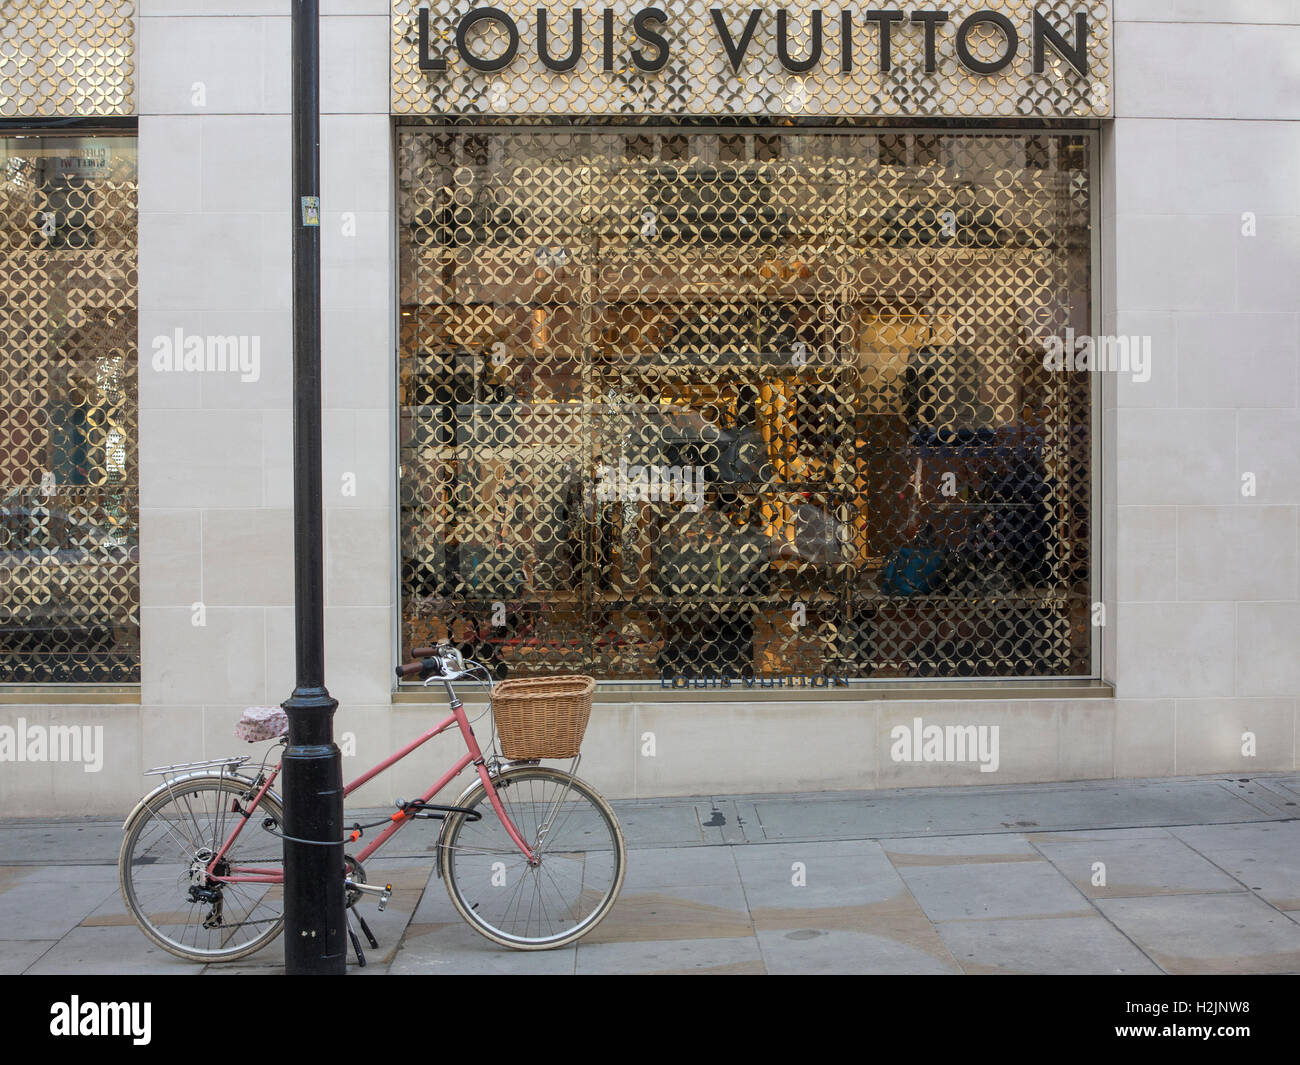 Sold at Auction: Louis Vuitton (1821-1892, French), Louis Vuitton